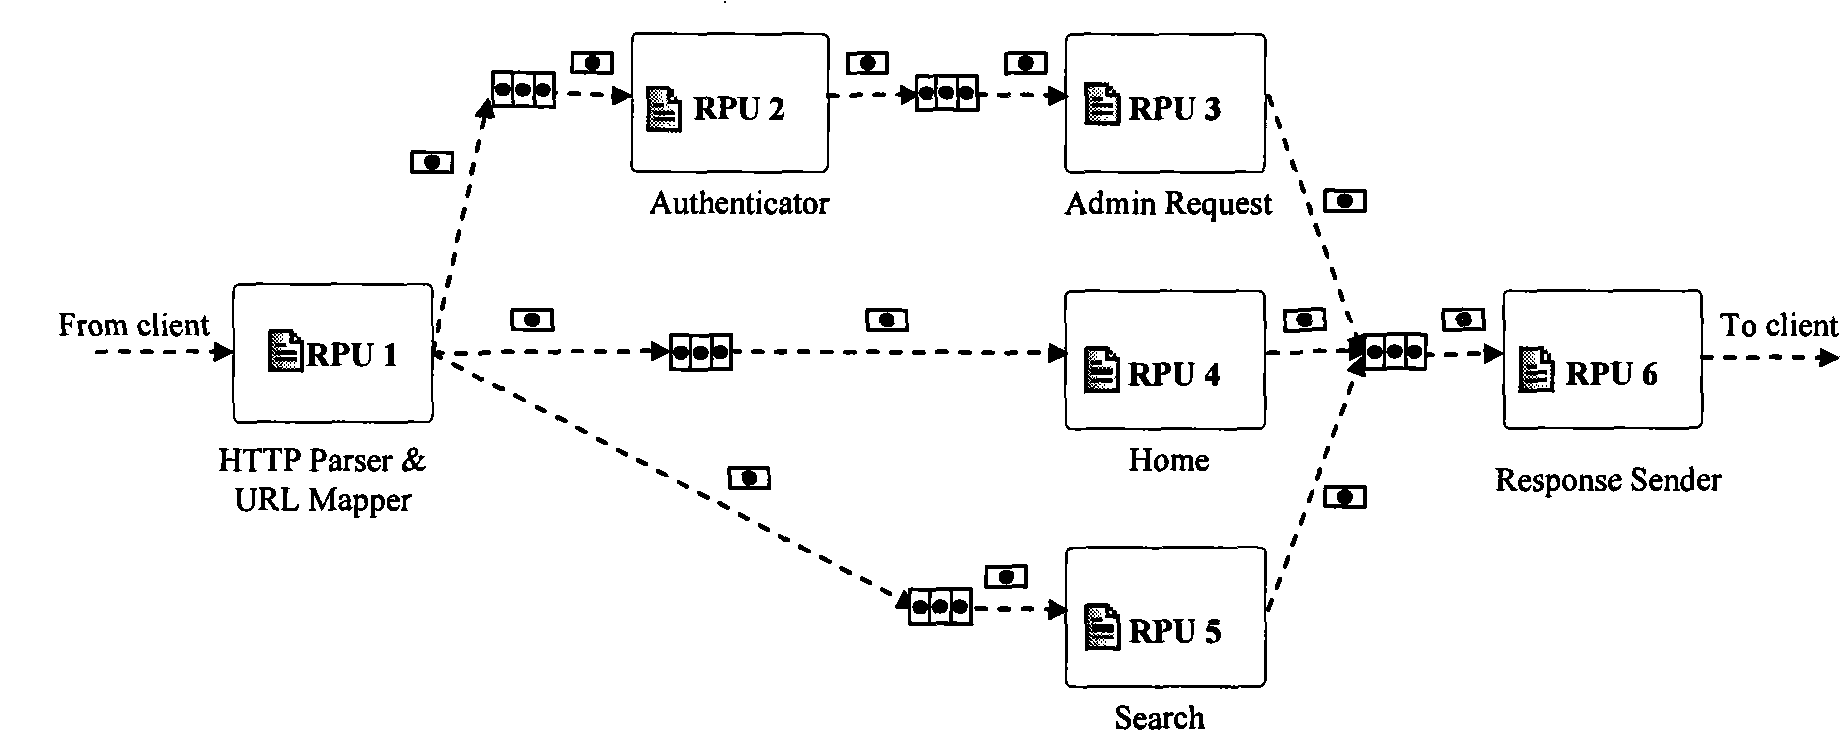 Java EE applications server parallel processing method